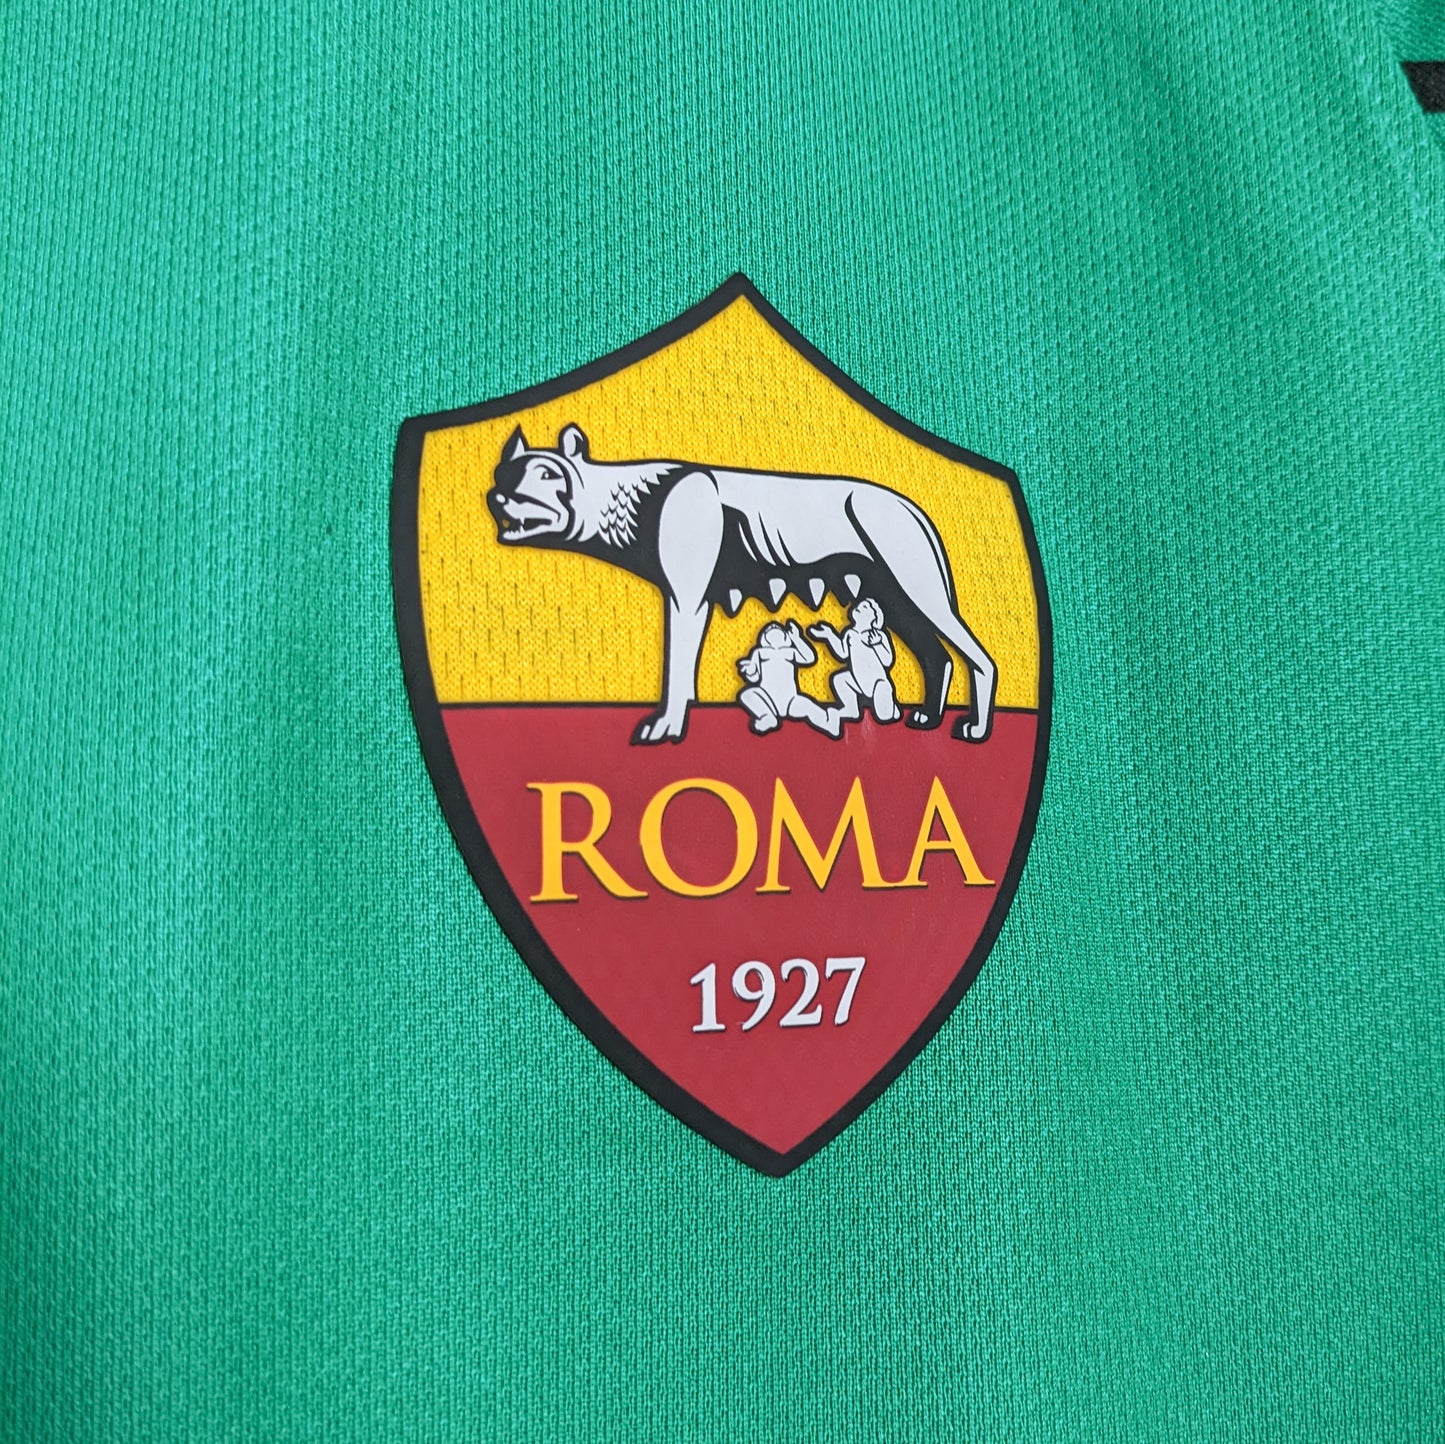 Authentic AS Roma 2017/2018 GK - Szczesny #1 Size L (P2R)